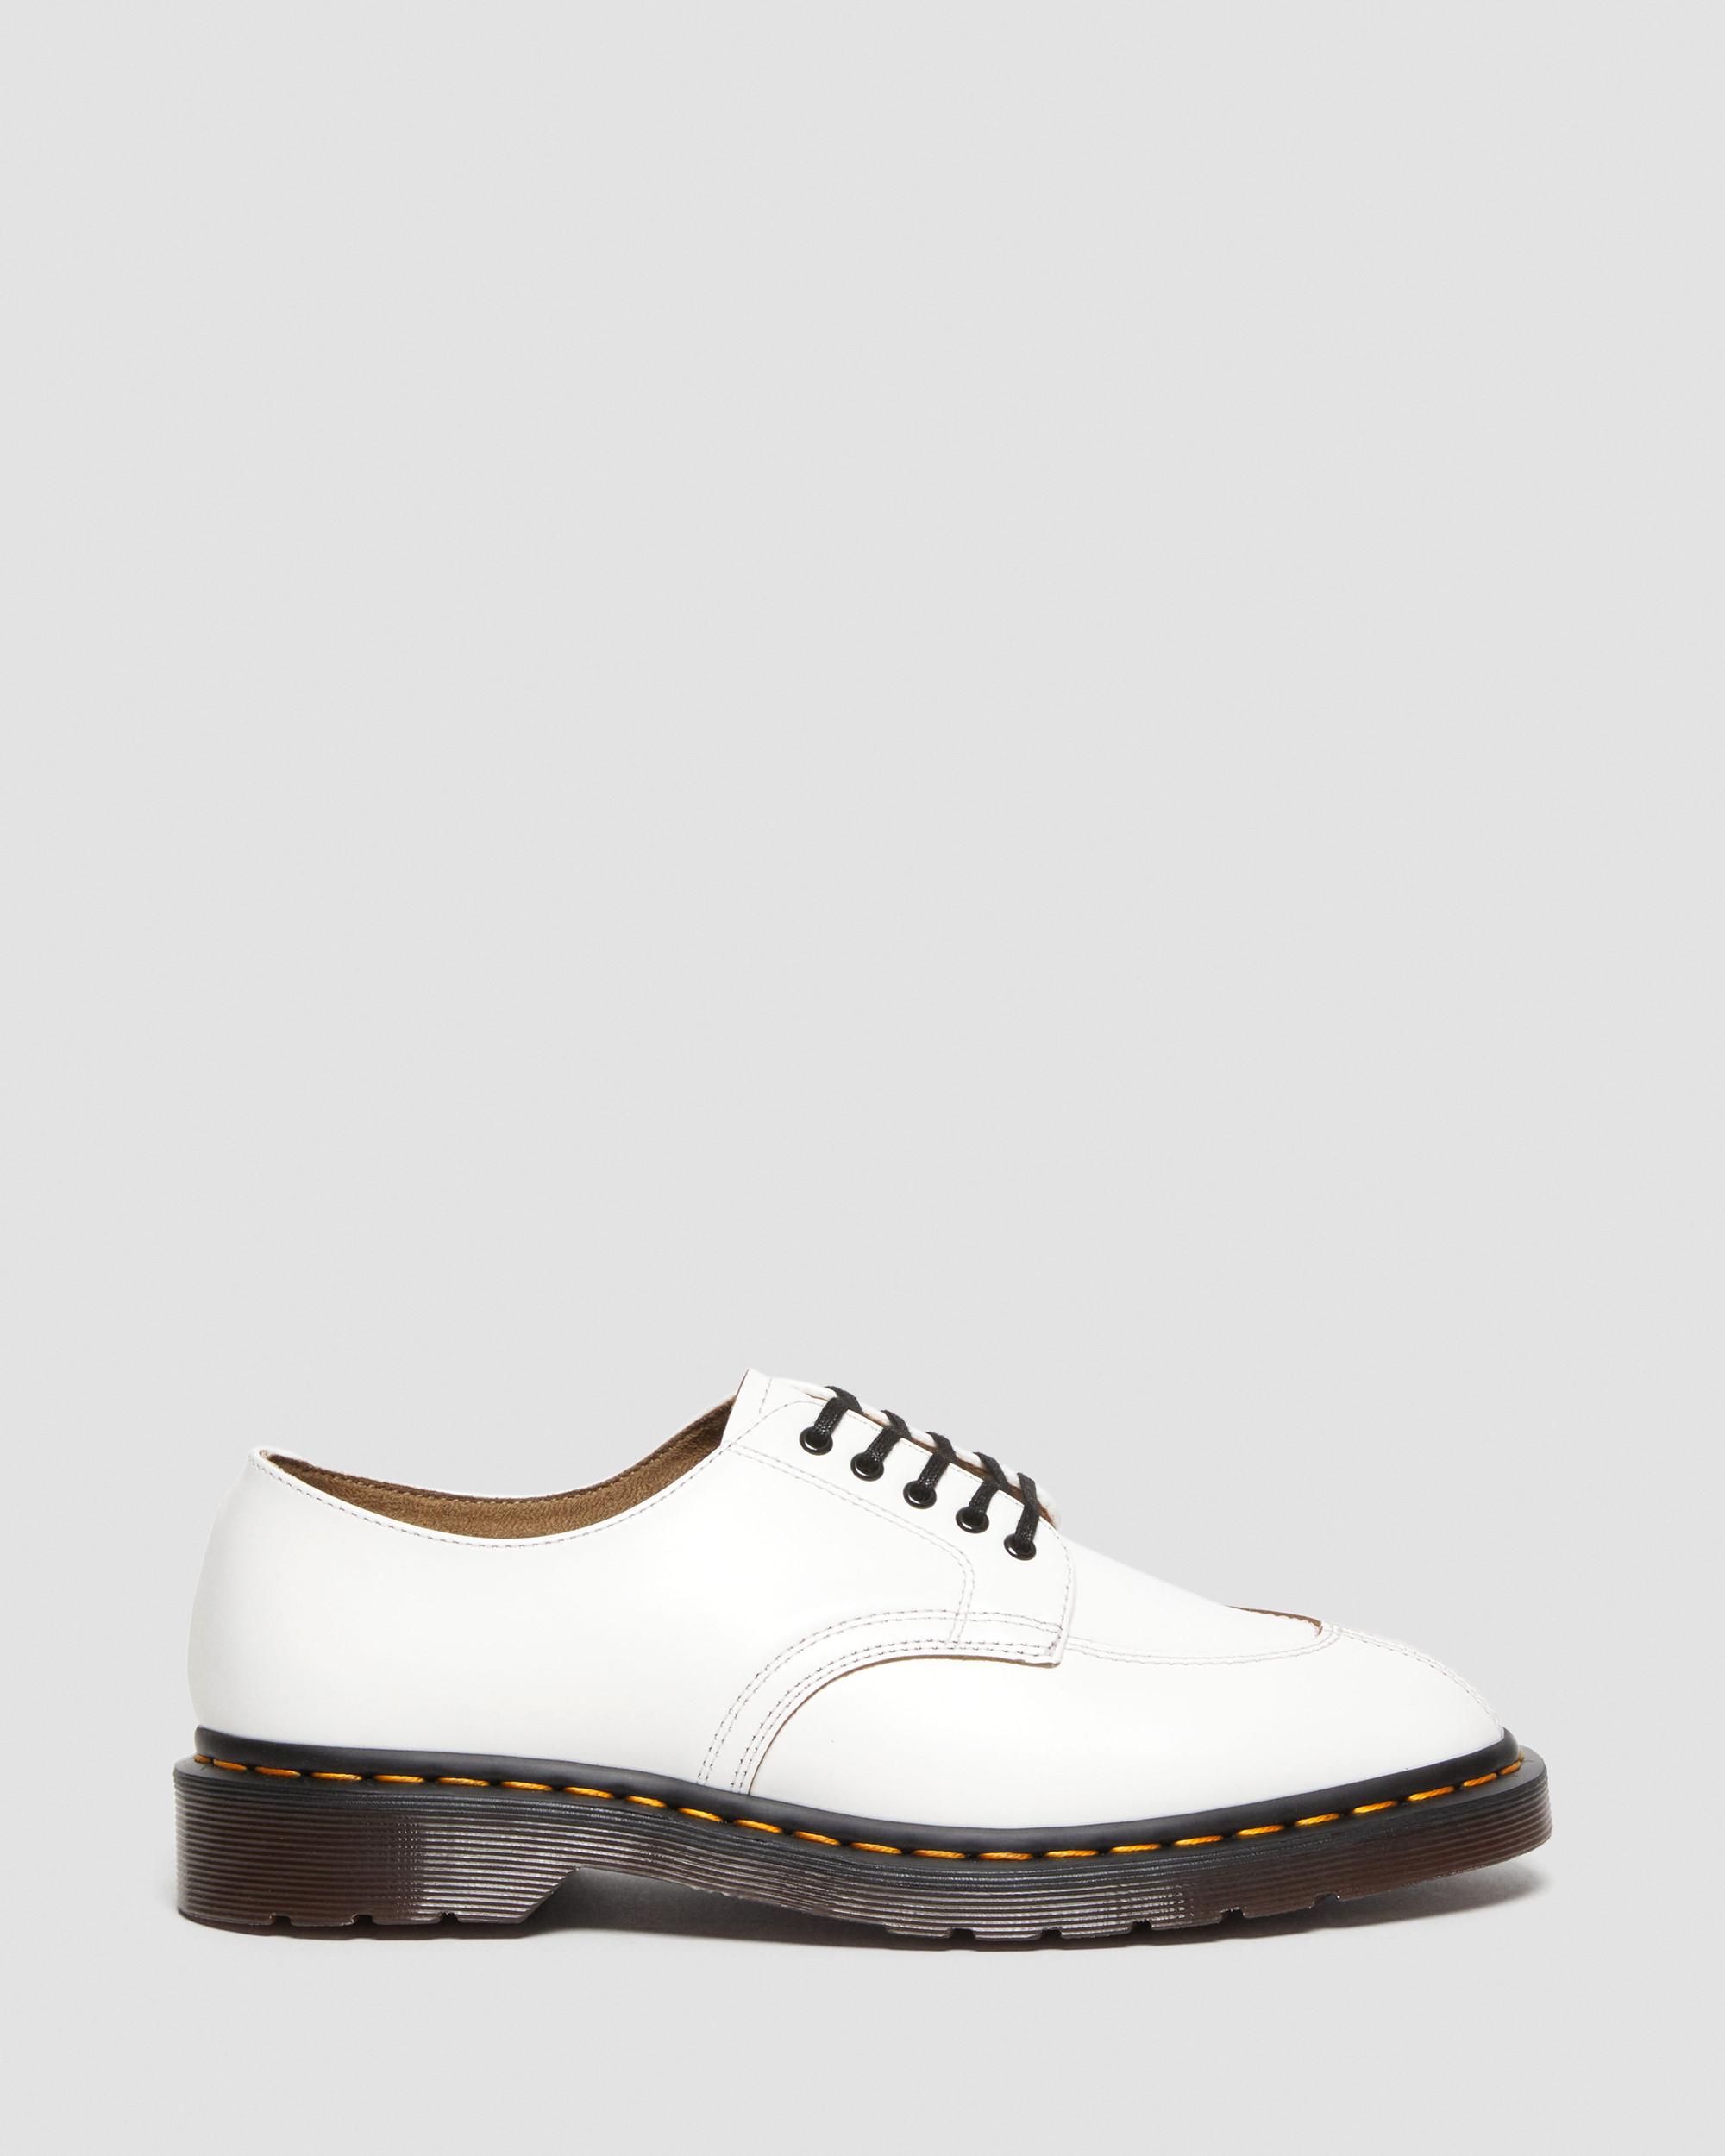 2046 Vintage Smooth Leather Oxford ShoesChaussures 2046 Vintage en cuir Smooth Dr. Martens